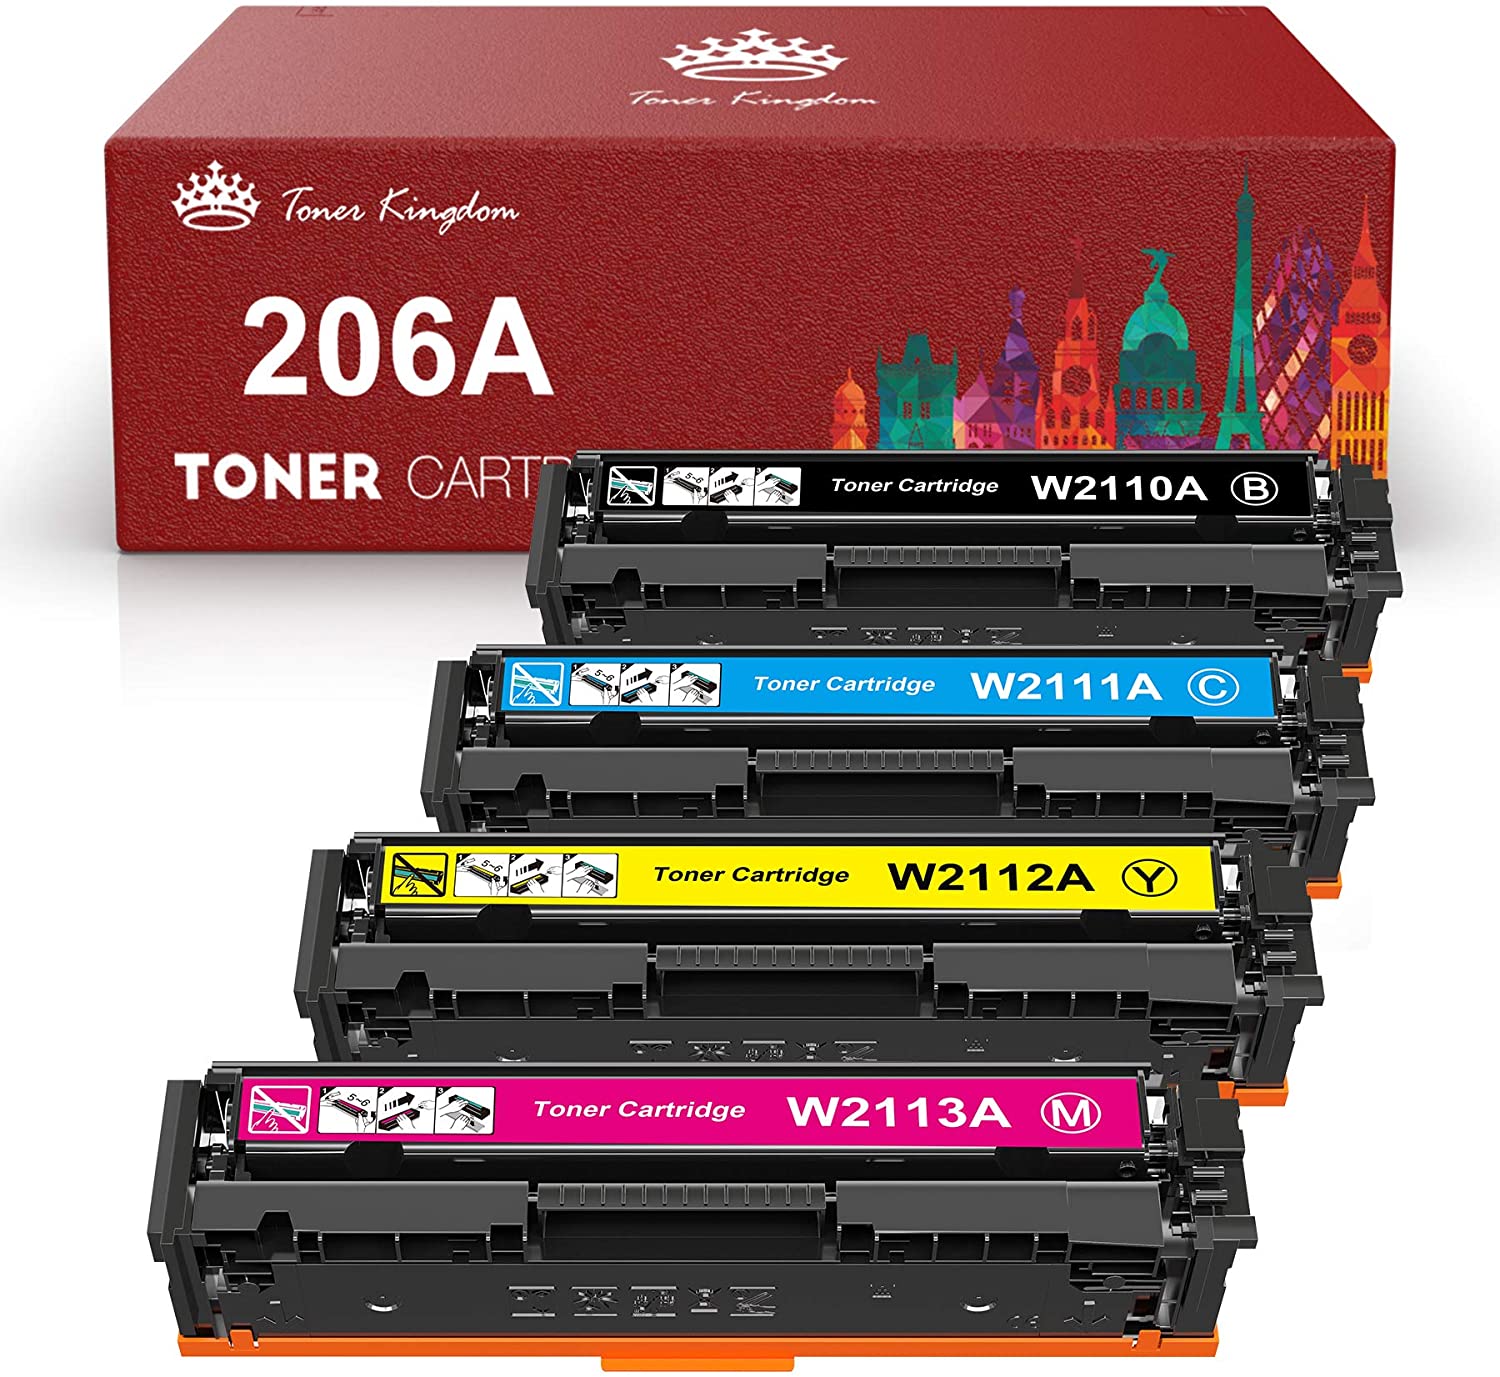 With Chip Compatible for HP 206A W2110A W2111A W2112A W2113A Toner Cartridge -4 Pack